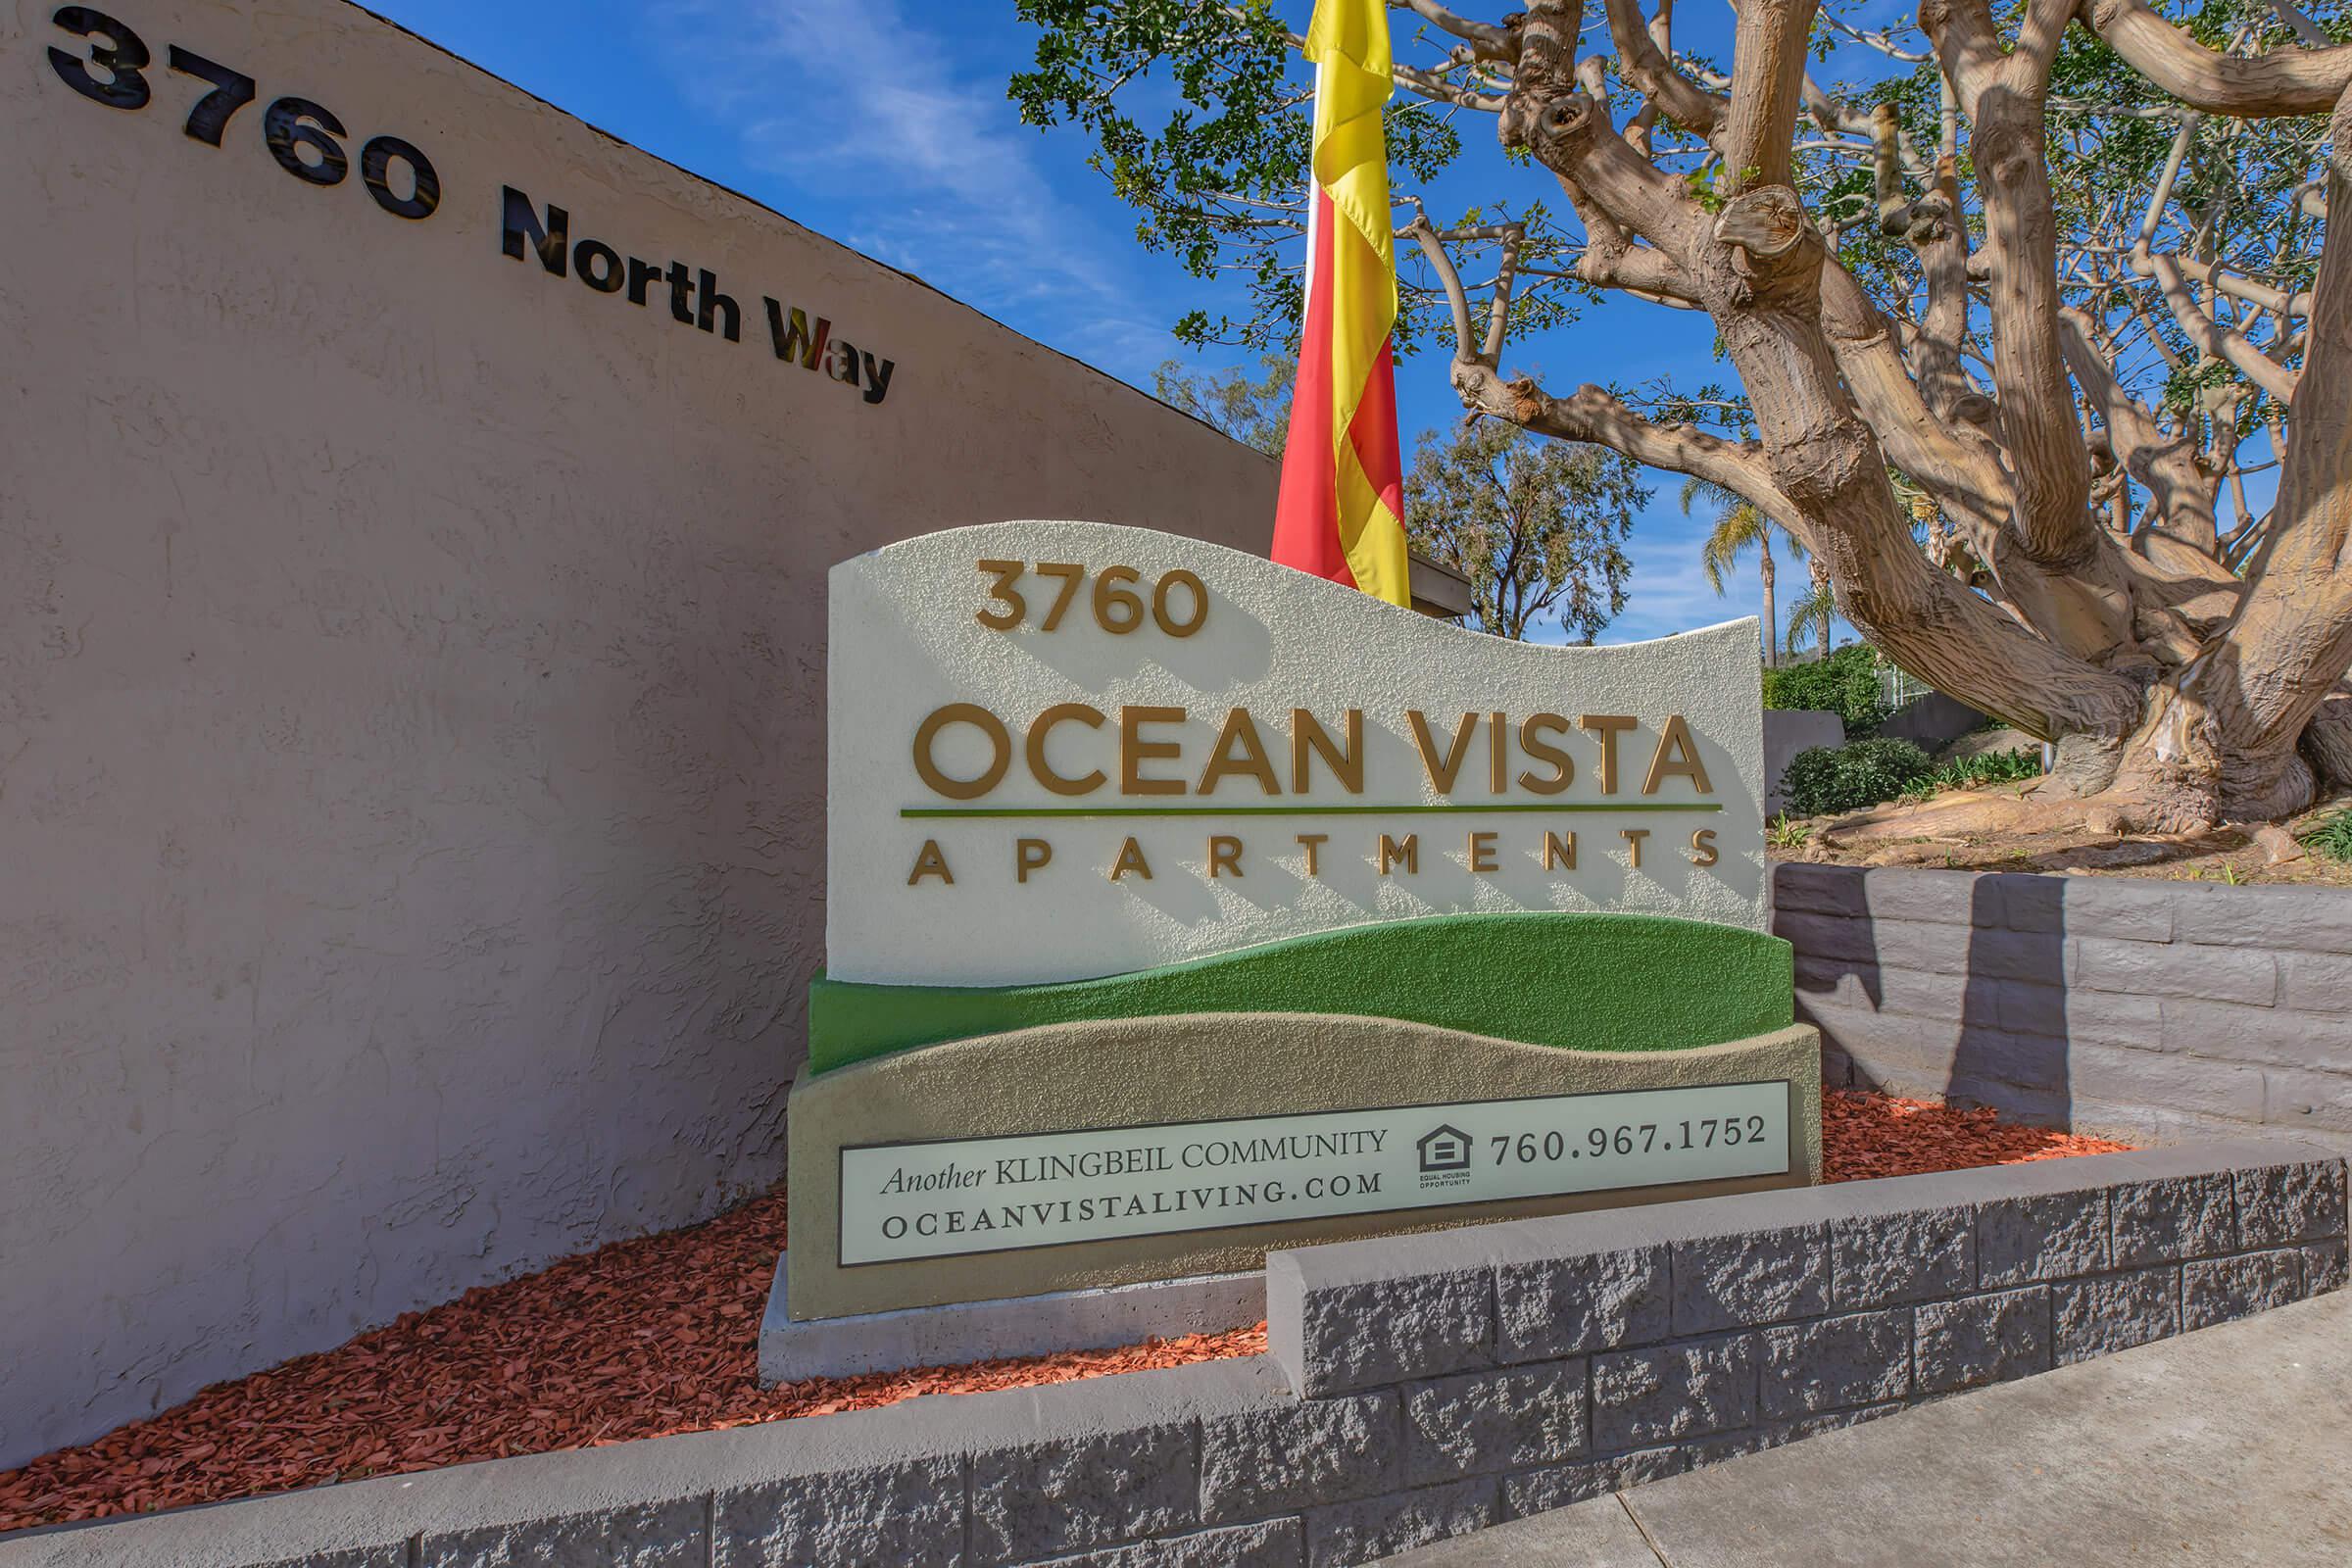 Landscaping at Ocean Vista Apartments in Oceanside, CA